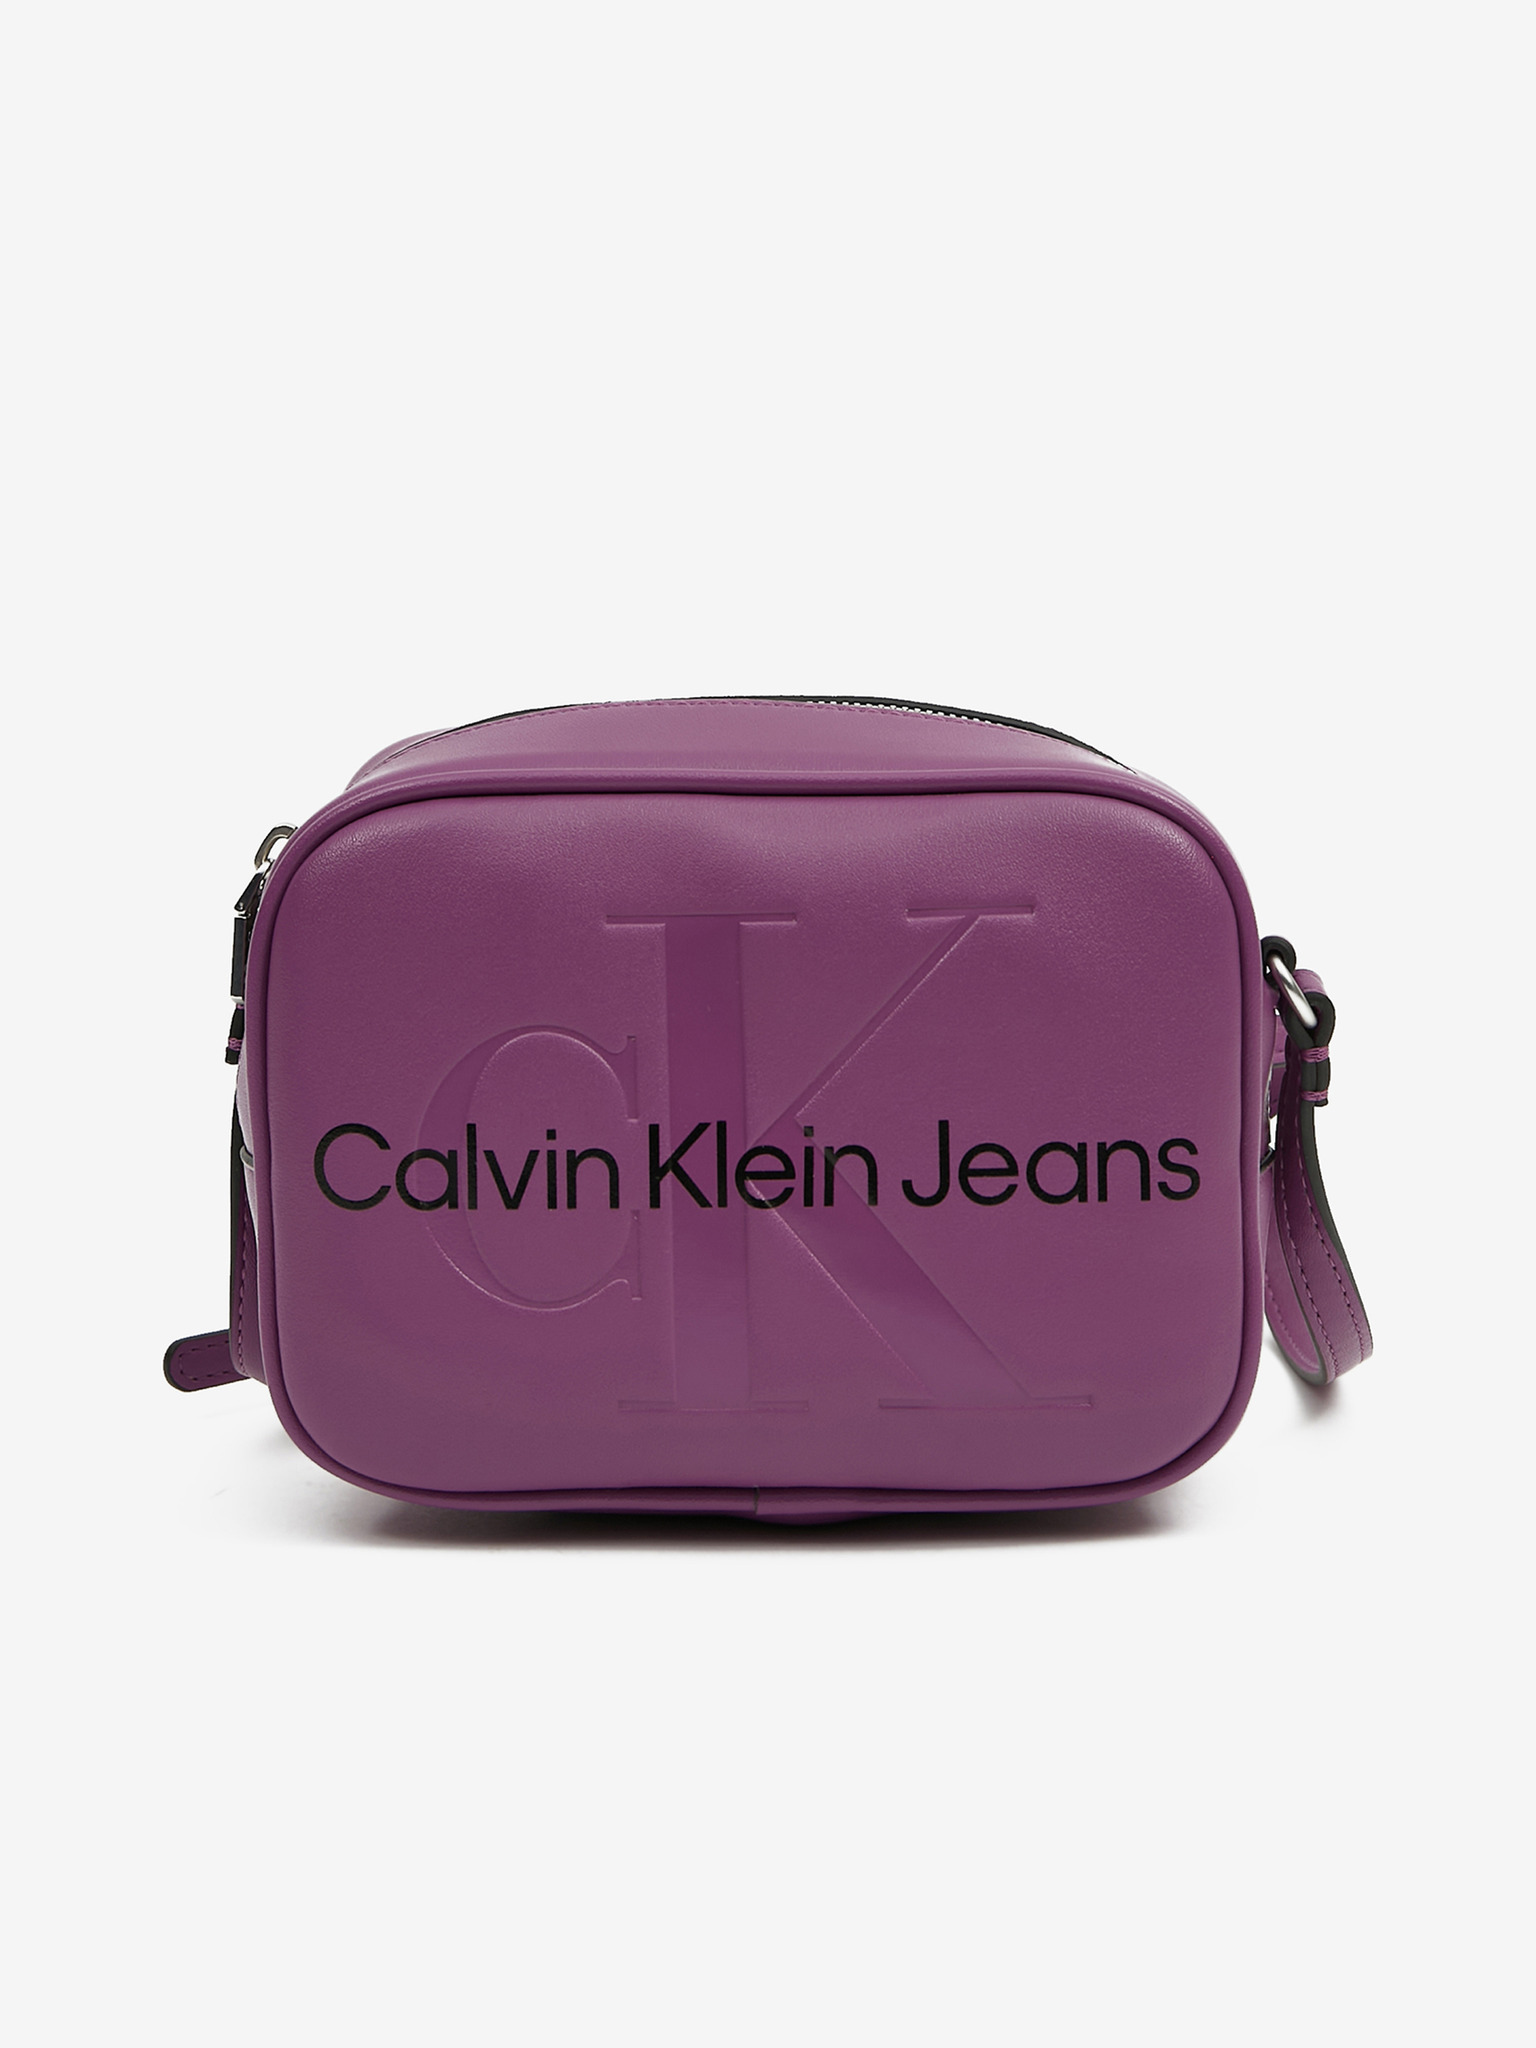 Klein 1 Cross Calvin body Jeans - Bag Sculpted bag Camera